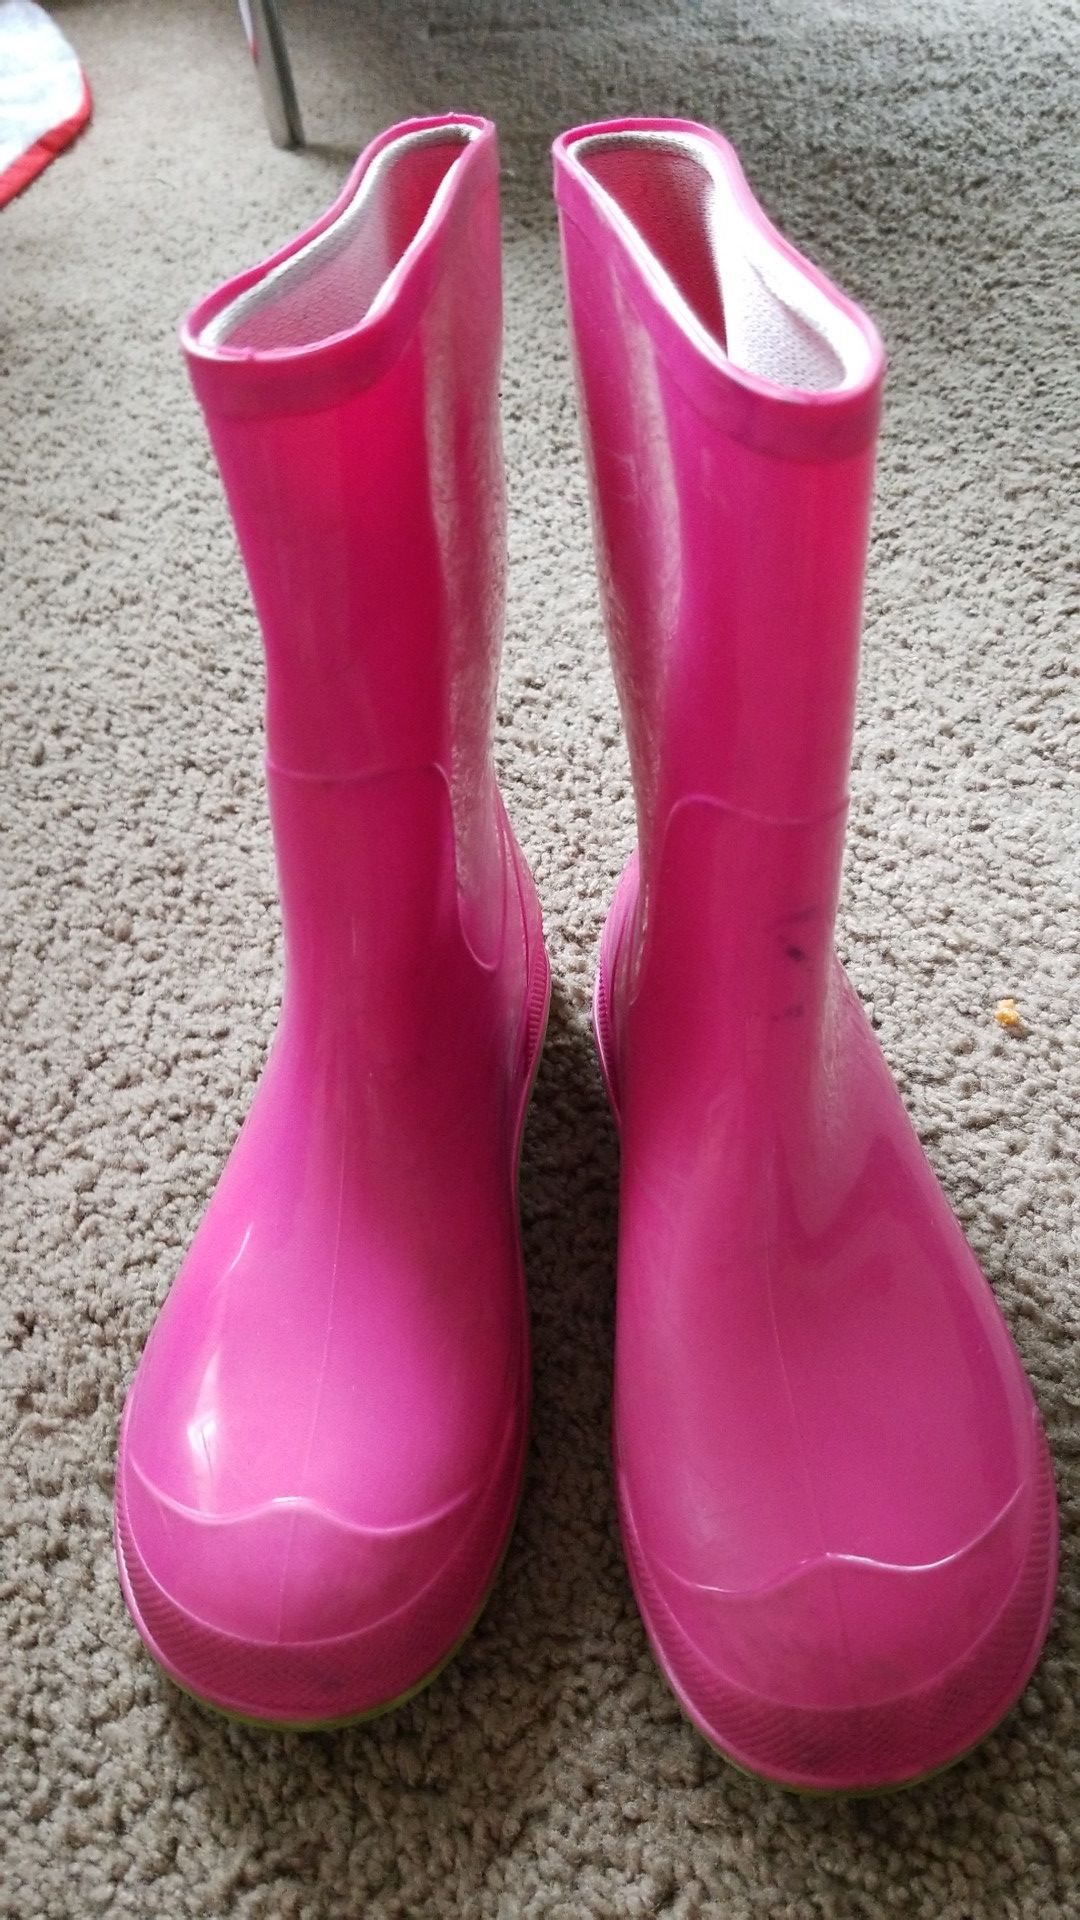 Rain boots for girl $5